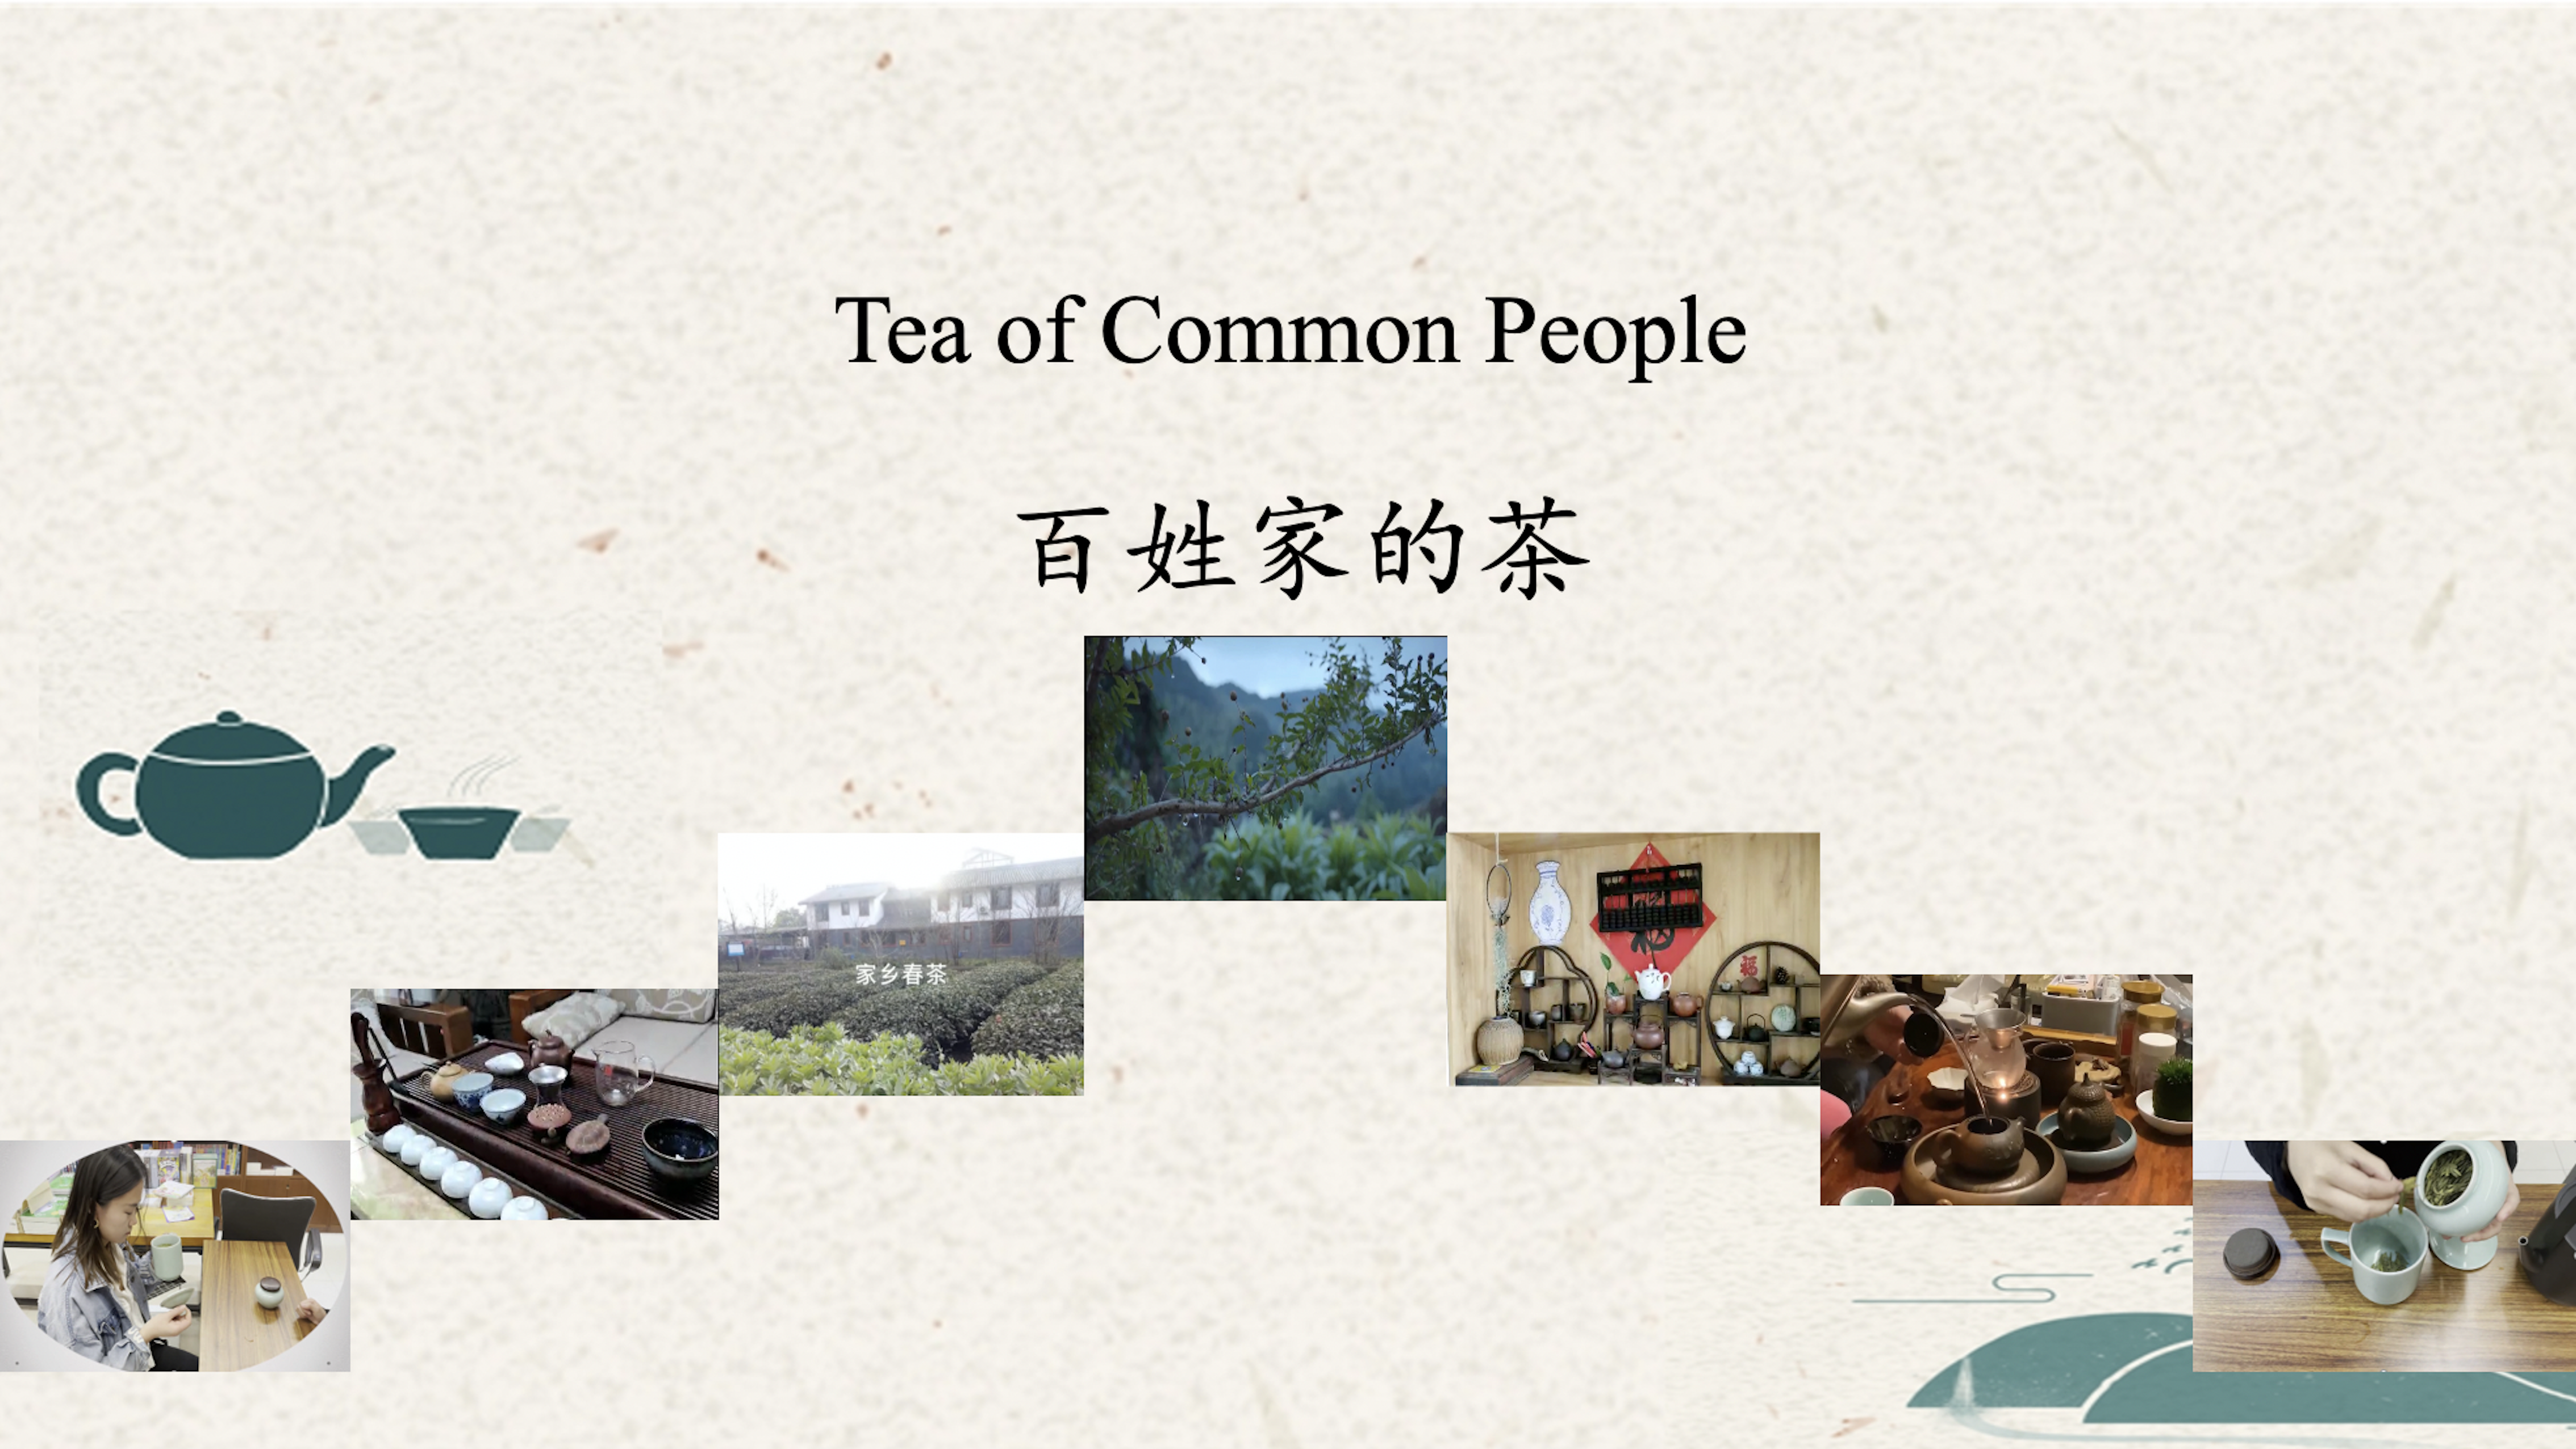 Tea of common people